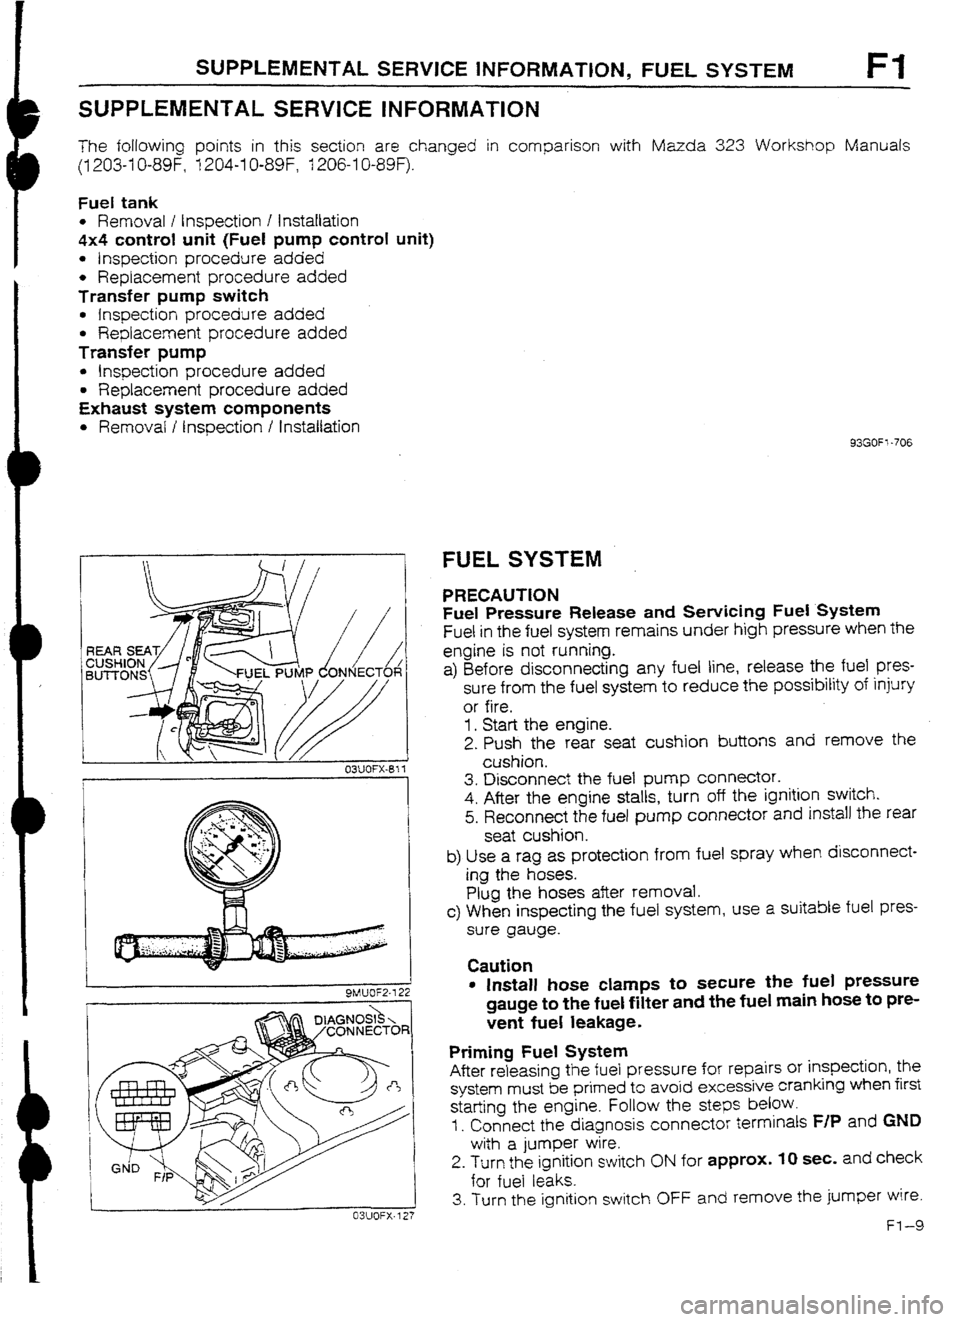 MAZDA 232 1990  Workshop Manual Suplement SUPPLEMENTAL SERVICE INFORMATION, FUEL SYSTEM Fl 
SUPPLEMENTAL SERVICE INFORMATION 
The following points in this section are changed in comparison with Mazda 323 Workshop Manuals 
(I 203-I U-89F, 1204